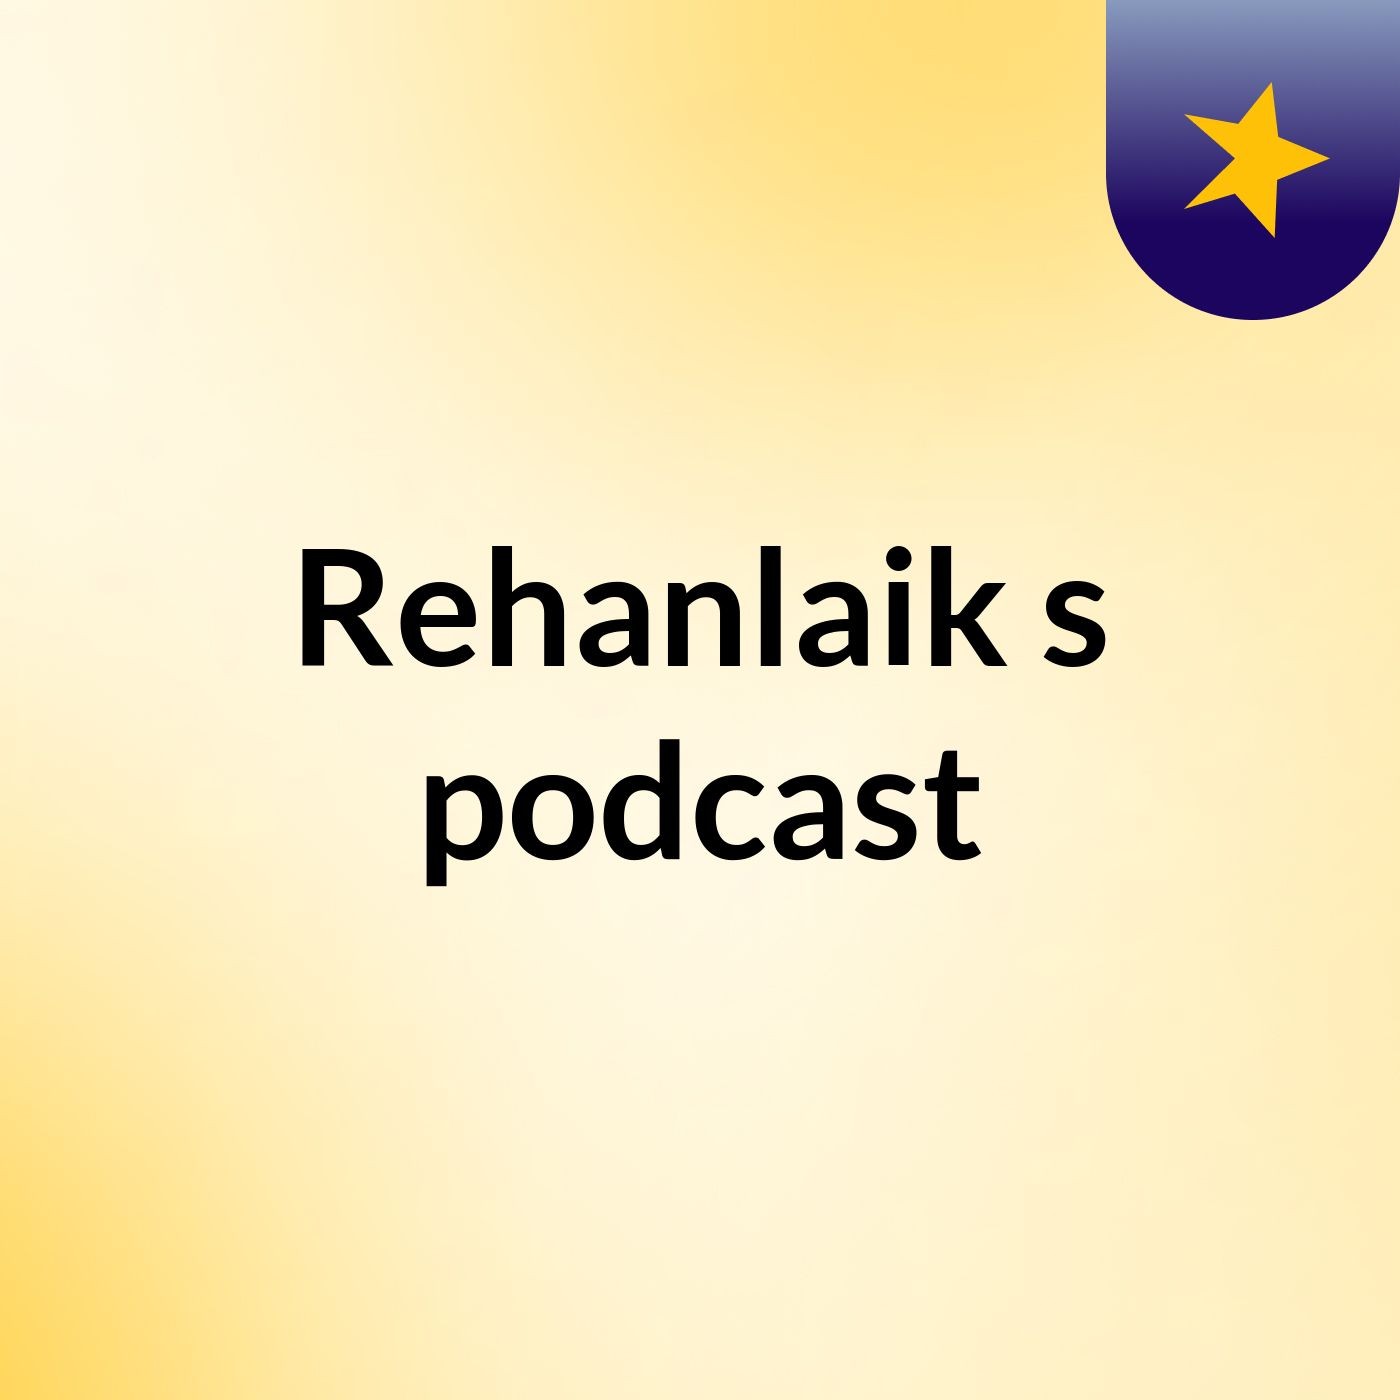 Rehanlaik's podcast